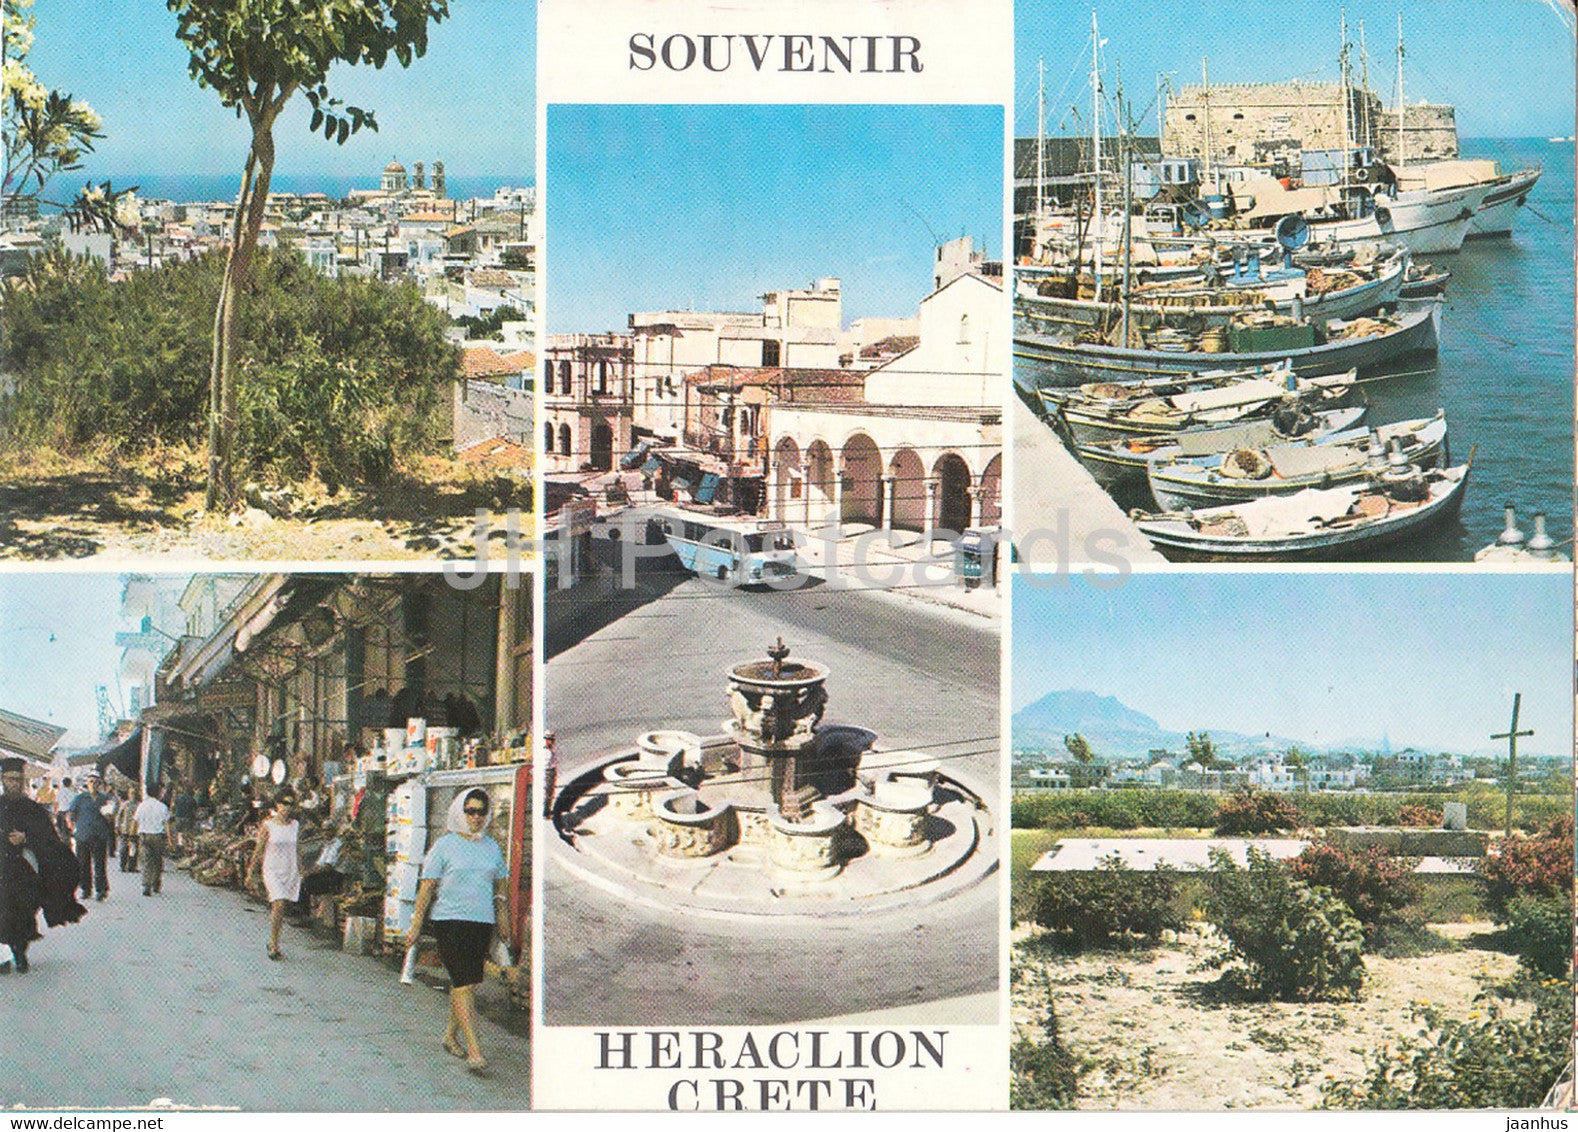 Souvenir - Heraclion - Crete - boat - multiview - 1984 - Greece - used - JH Postcards